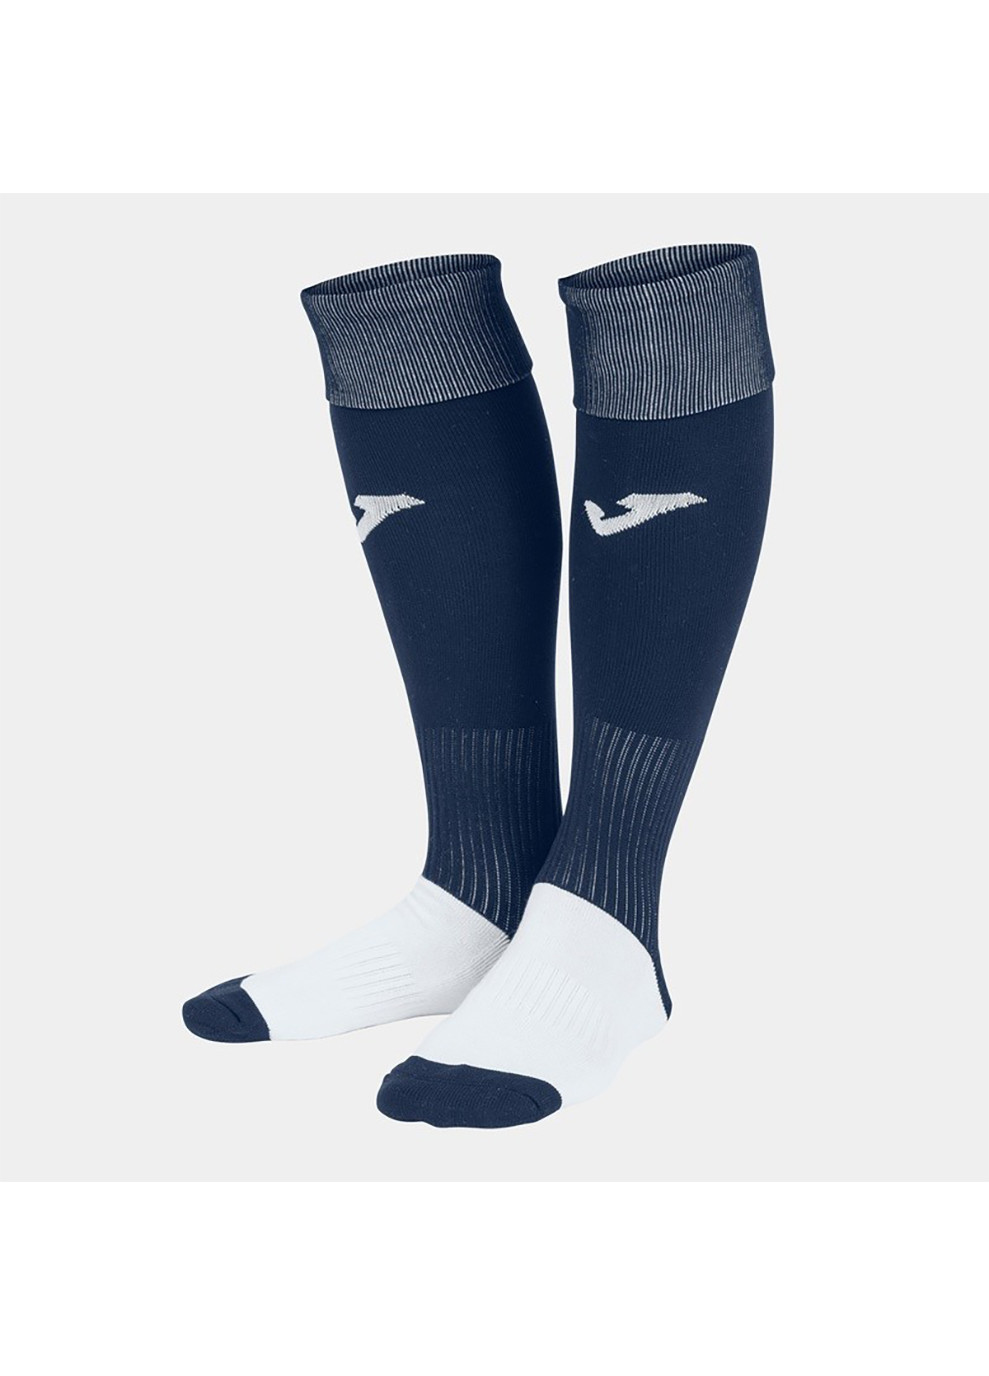 Гетры SOCKS FOOTBALL PROFESSIONAL II DARK NAVY-WHITE темно-синий,белый Joma (260646911)